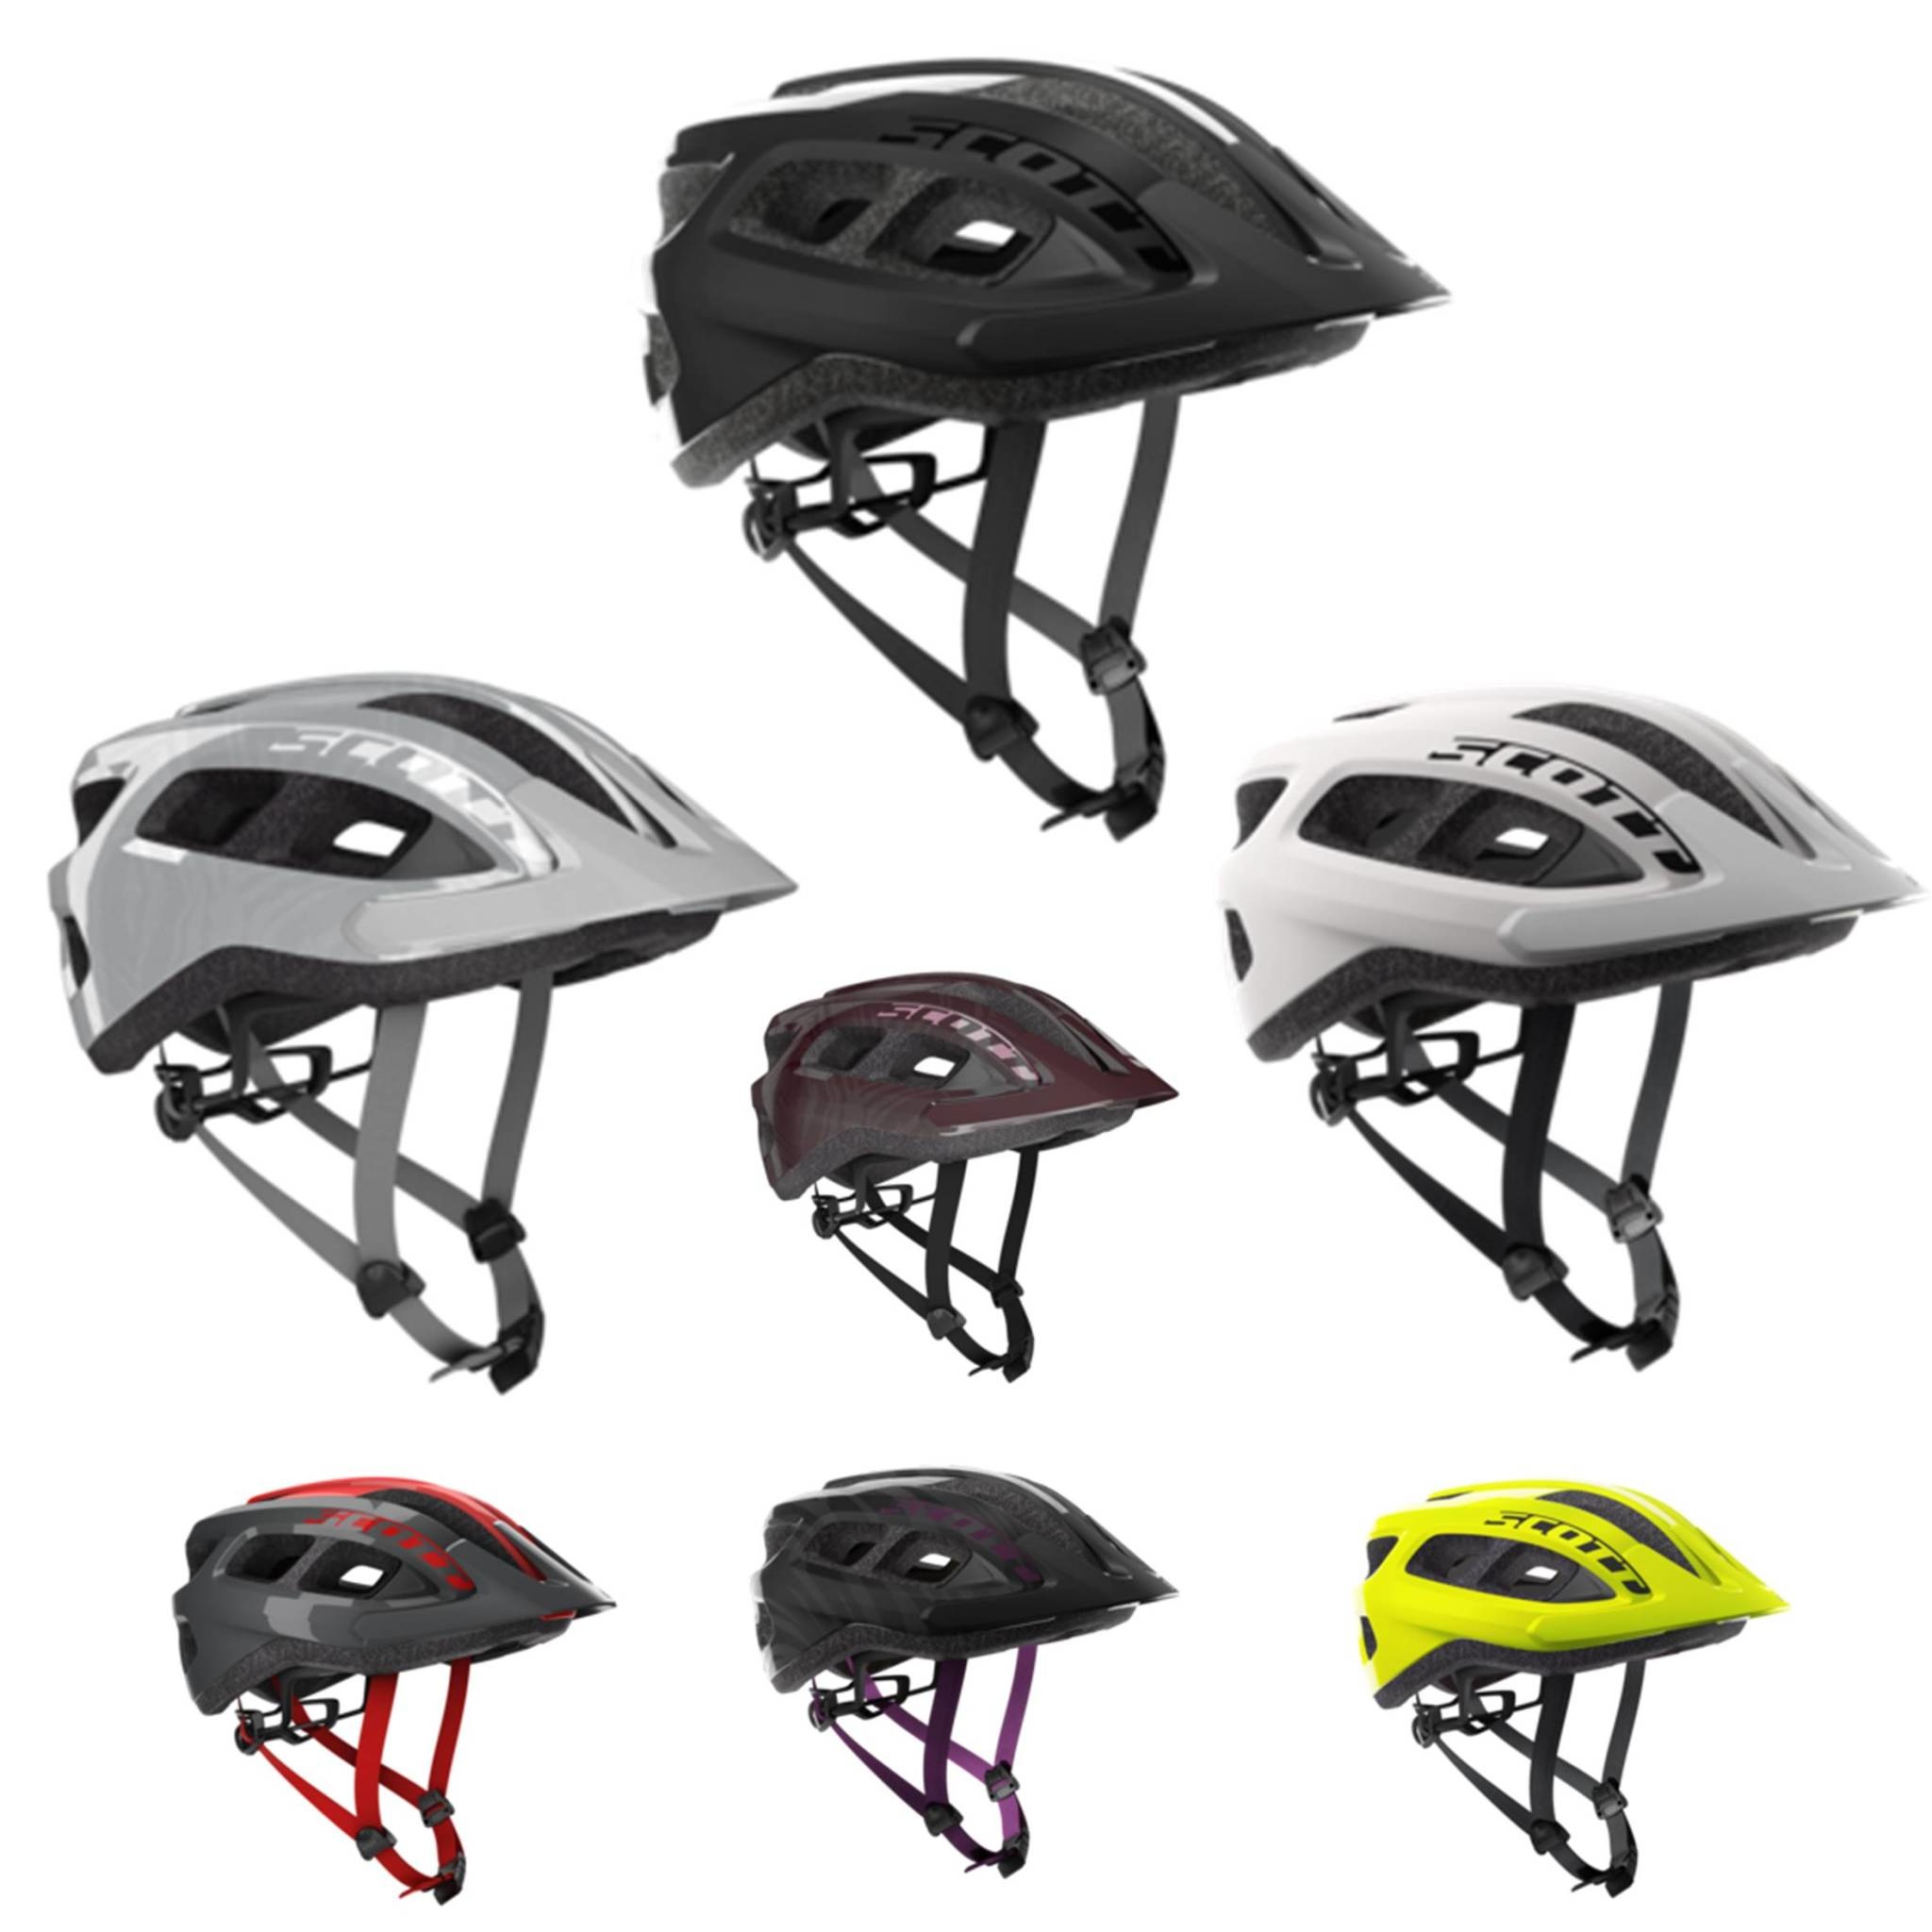 SILVER MTB / Urban Bicycle Bike Helmet Scott One Size 54-61cm Supra 